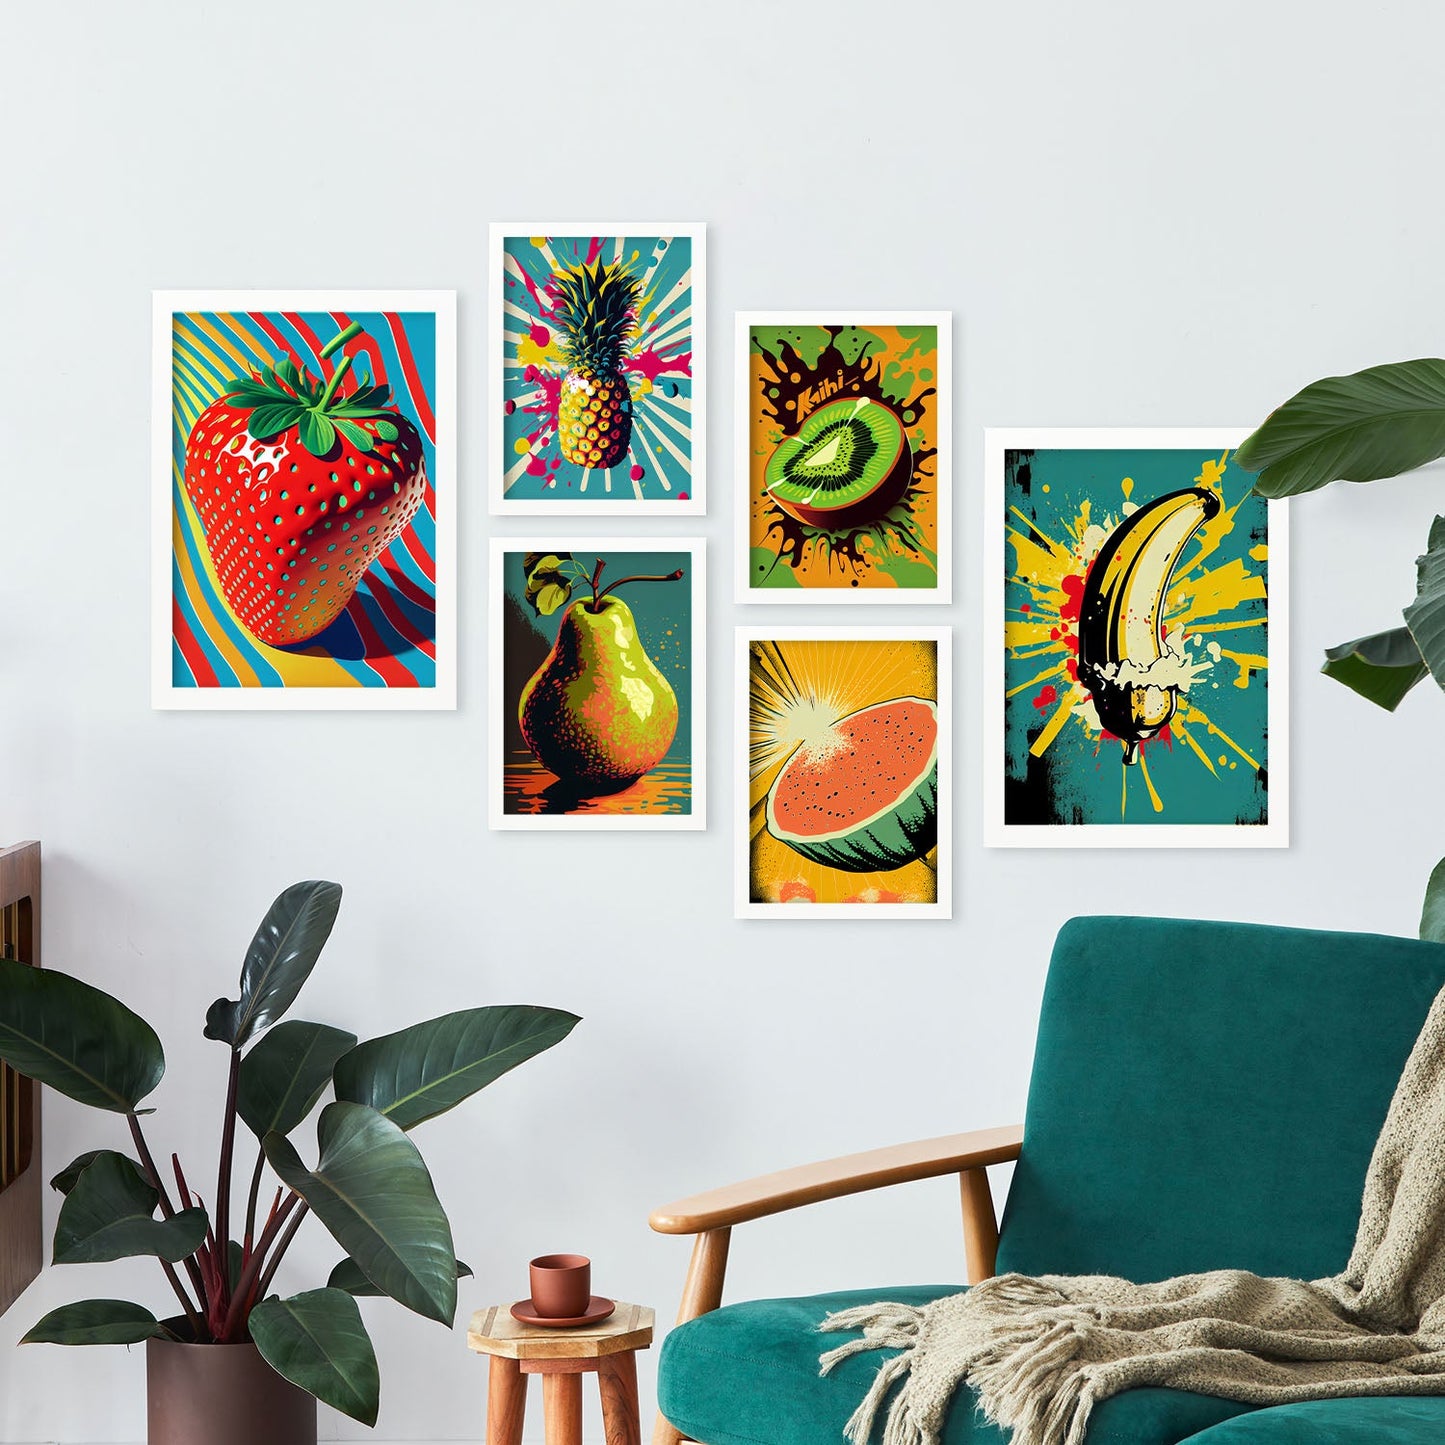 Nacnic Pop Art Vegtables Set_2. Aesthetic Wall Art Prints for Bedroom or Living Room Design.